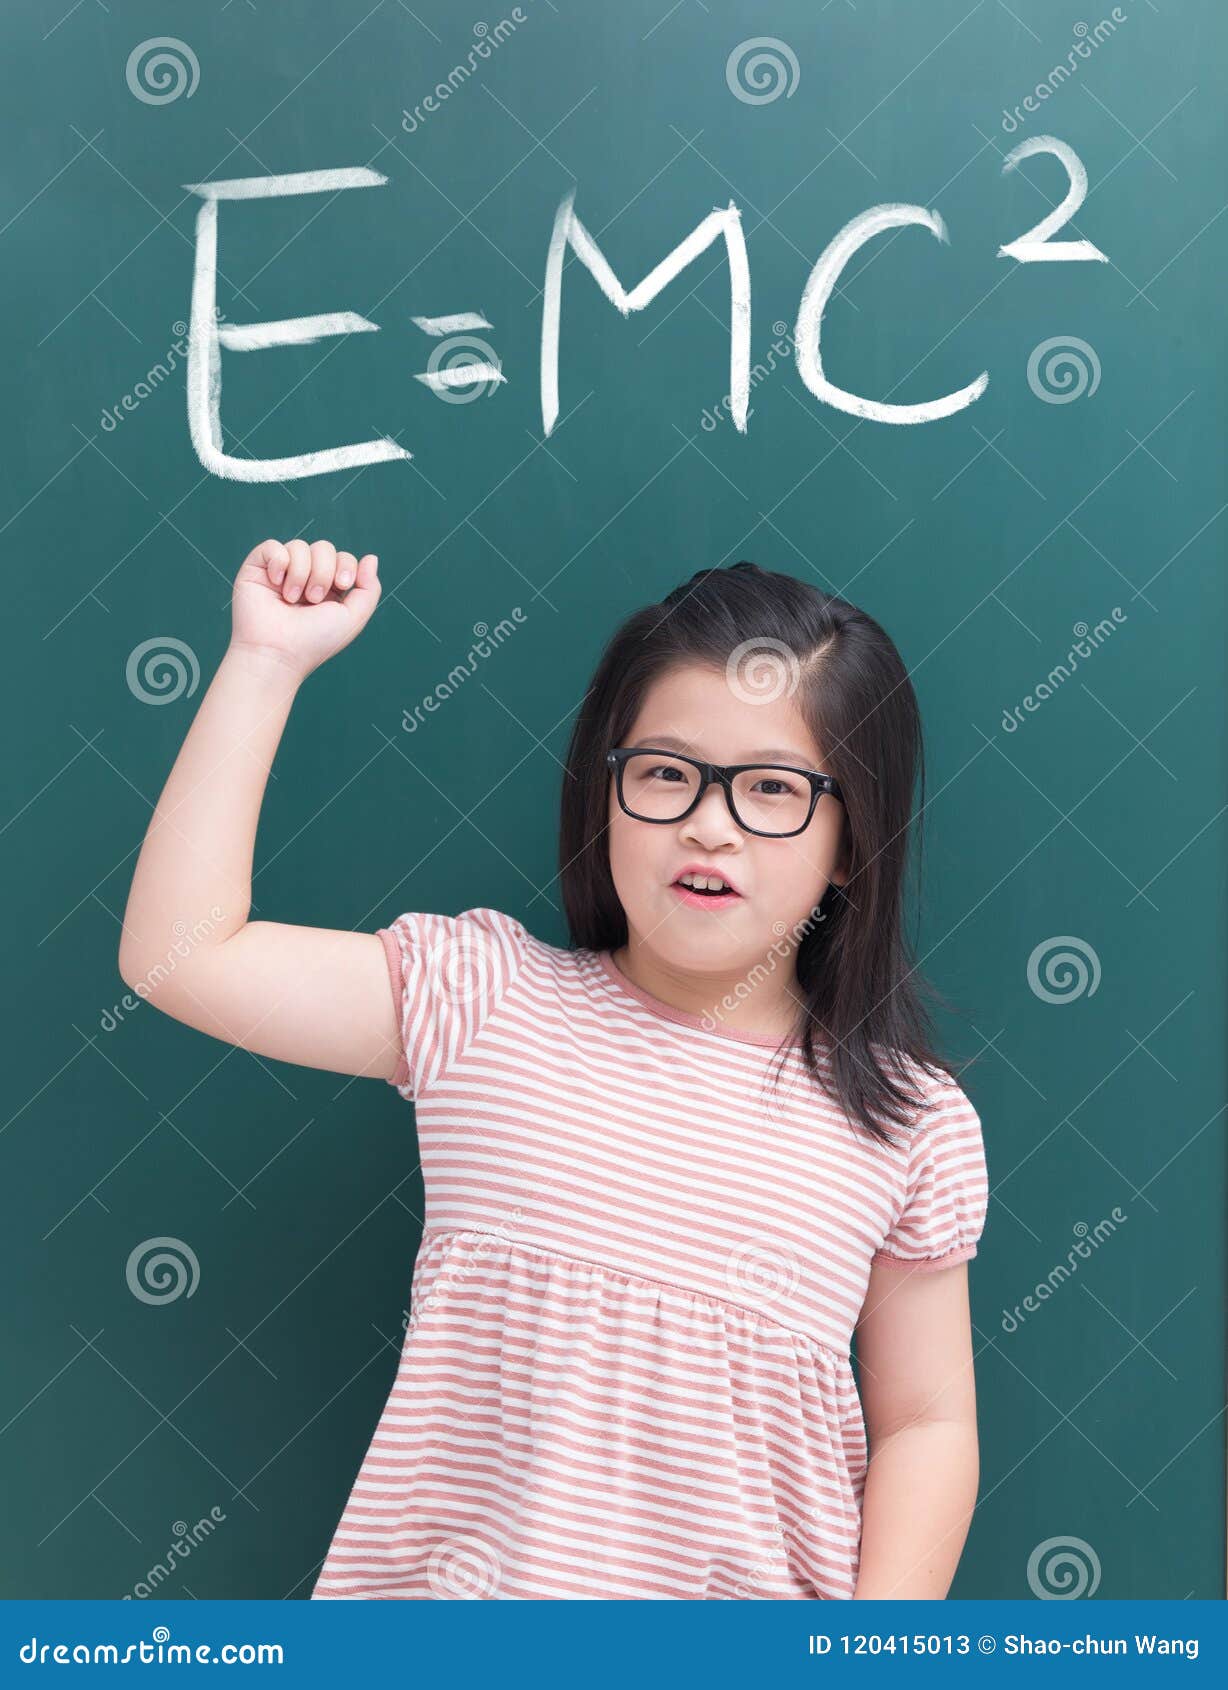 cute girl with e=mc2